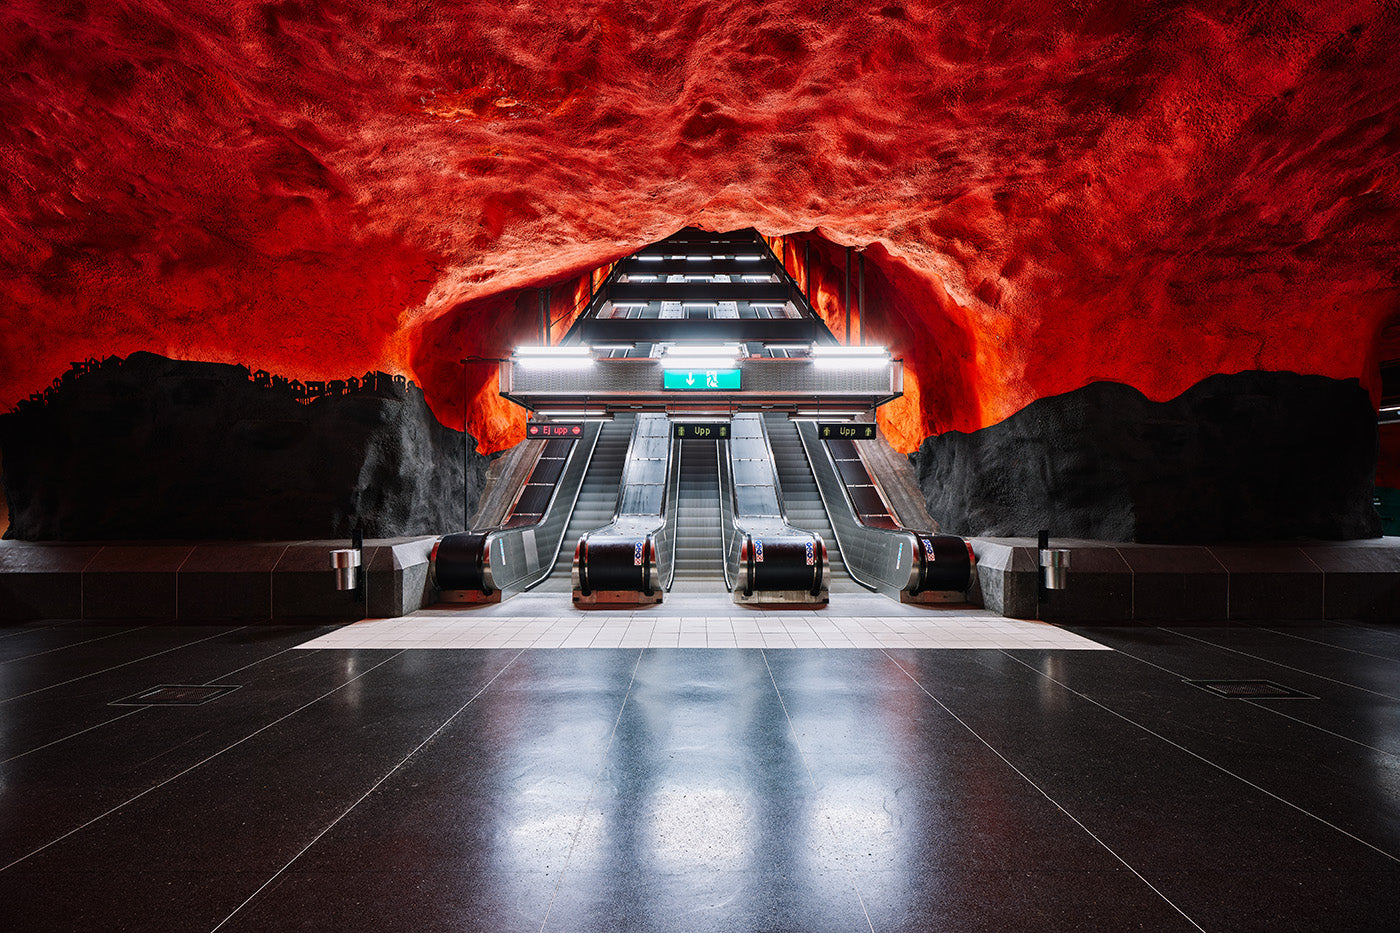 A Day Below Stockholm by David Altrath